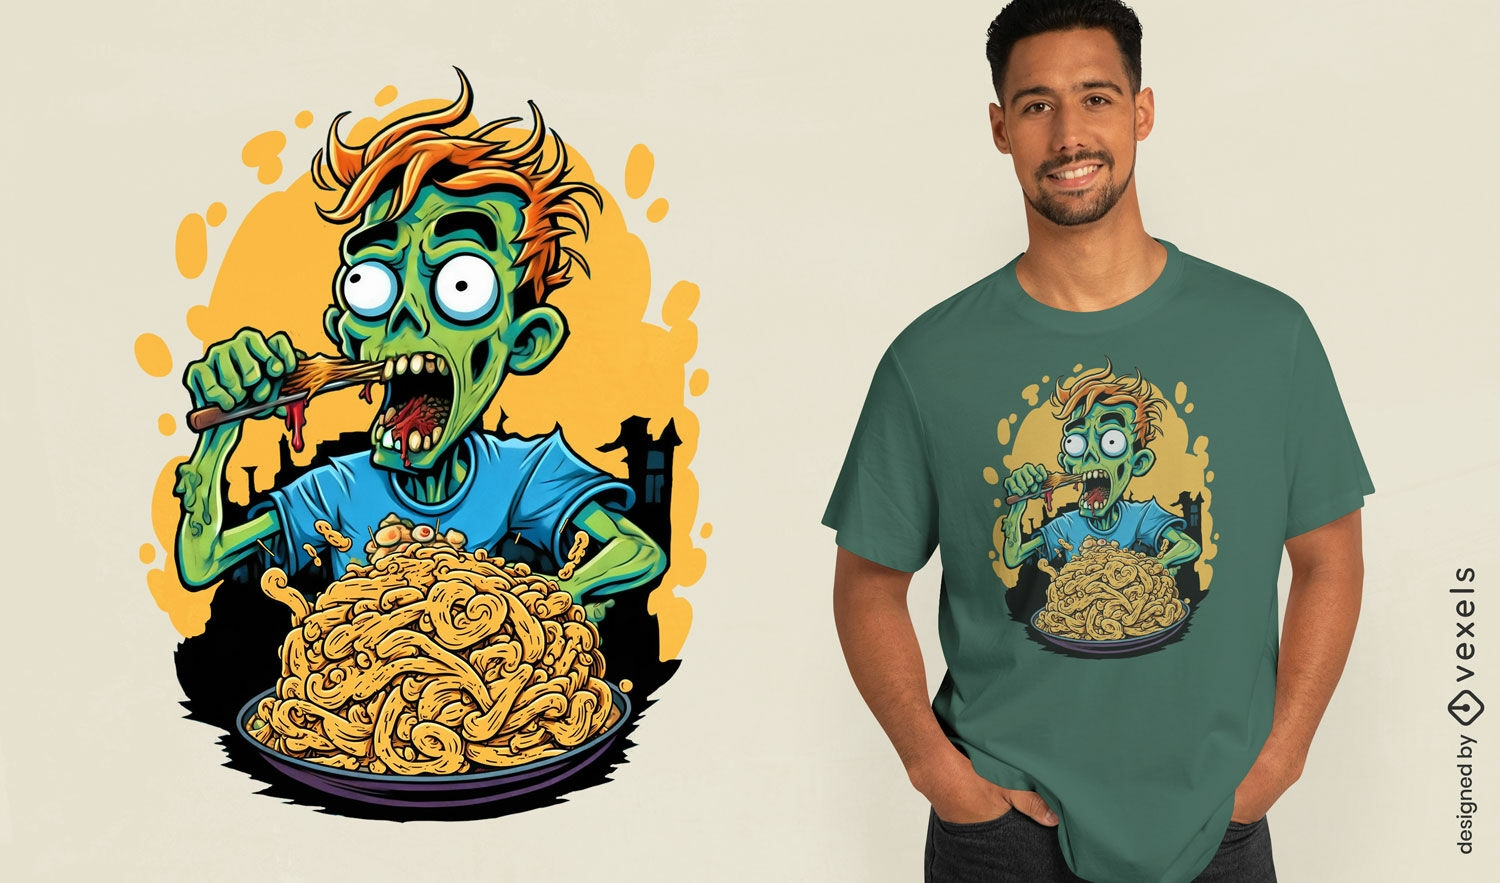 Dise?o de camiseta zombie comiendo fideos.